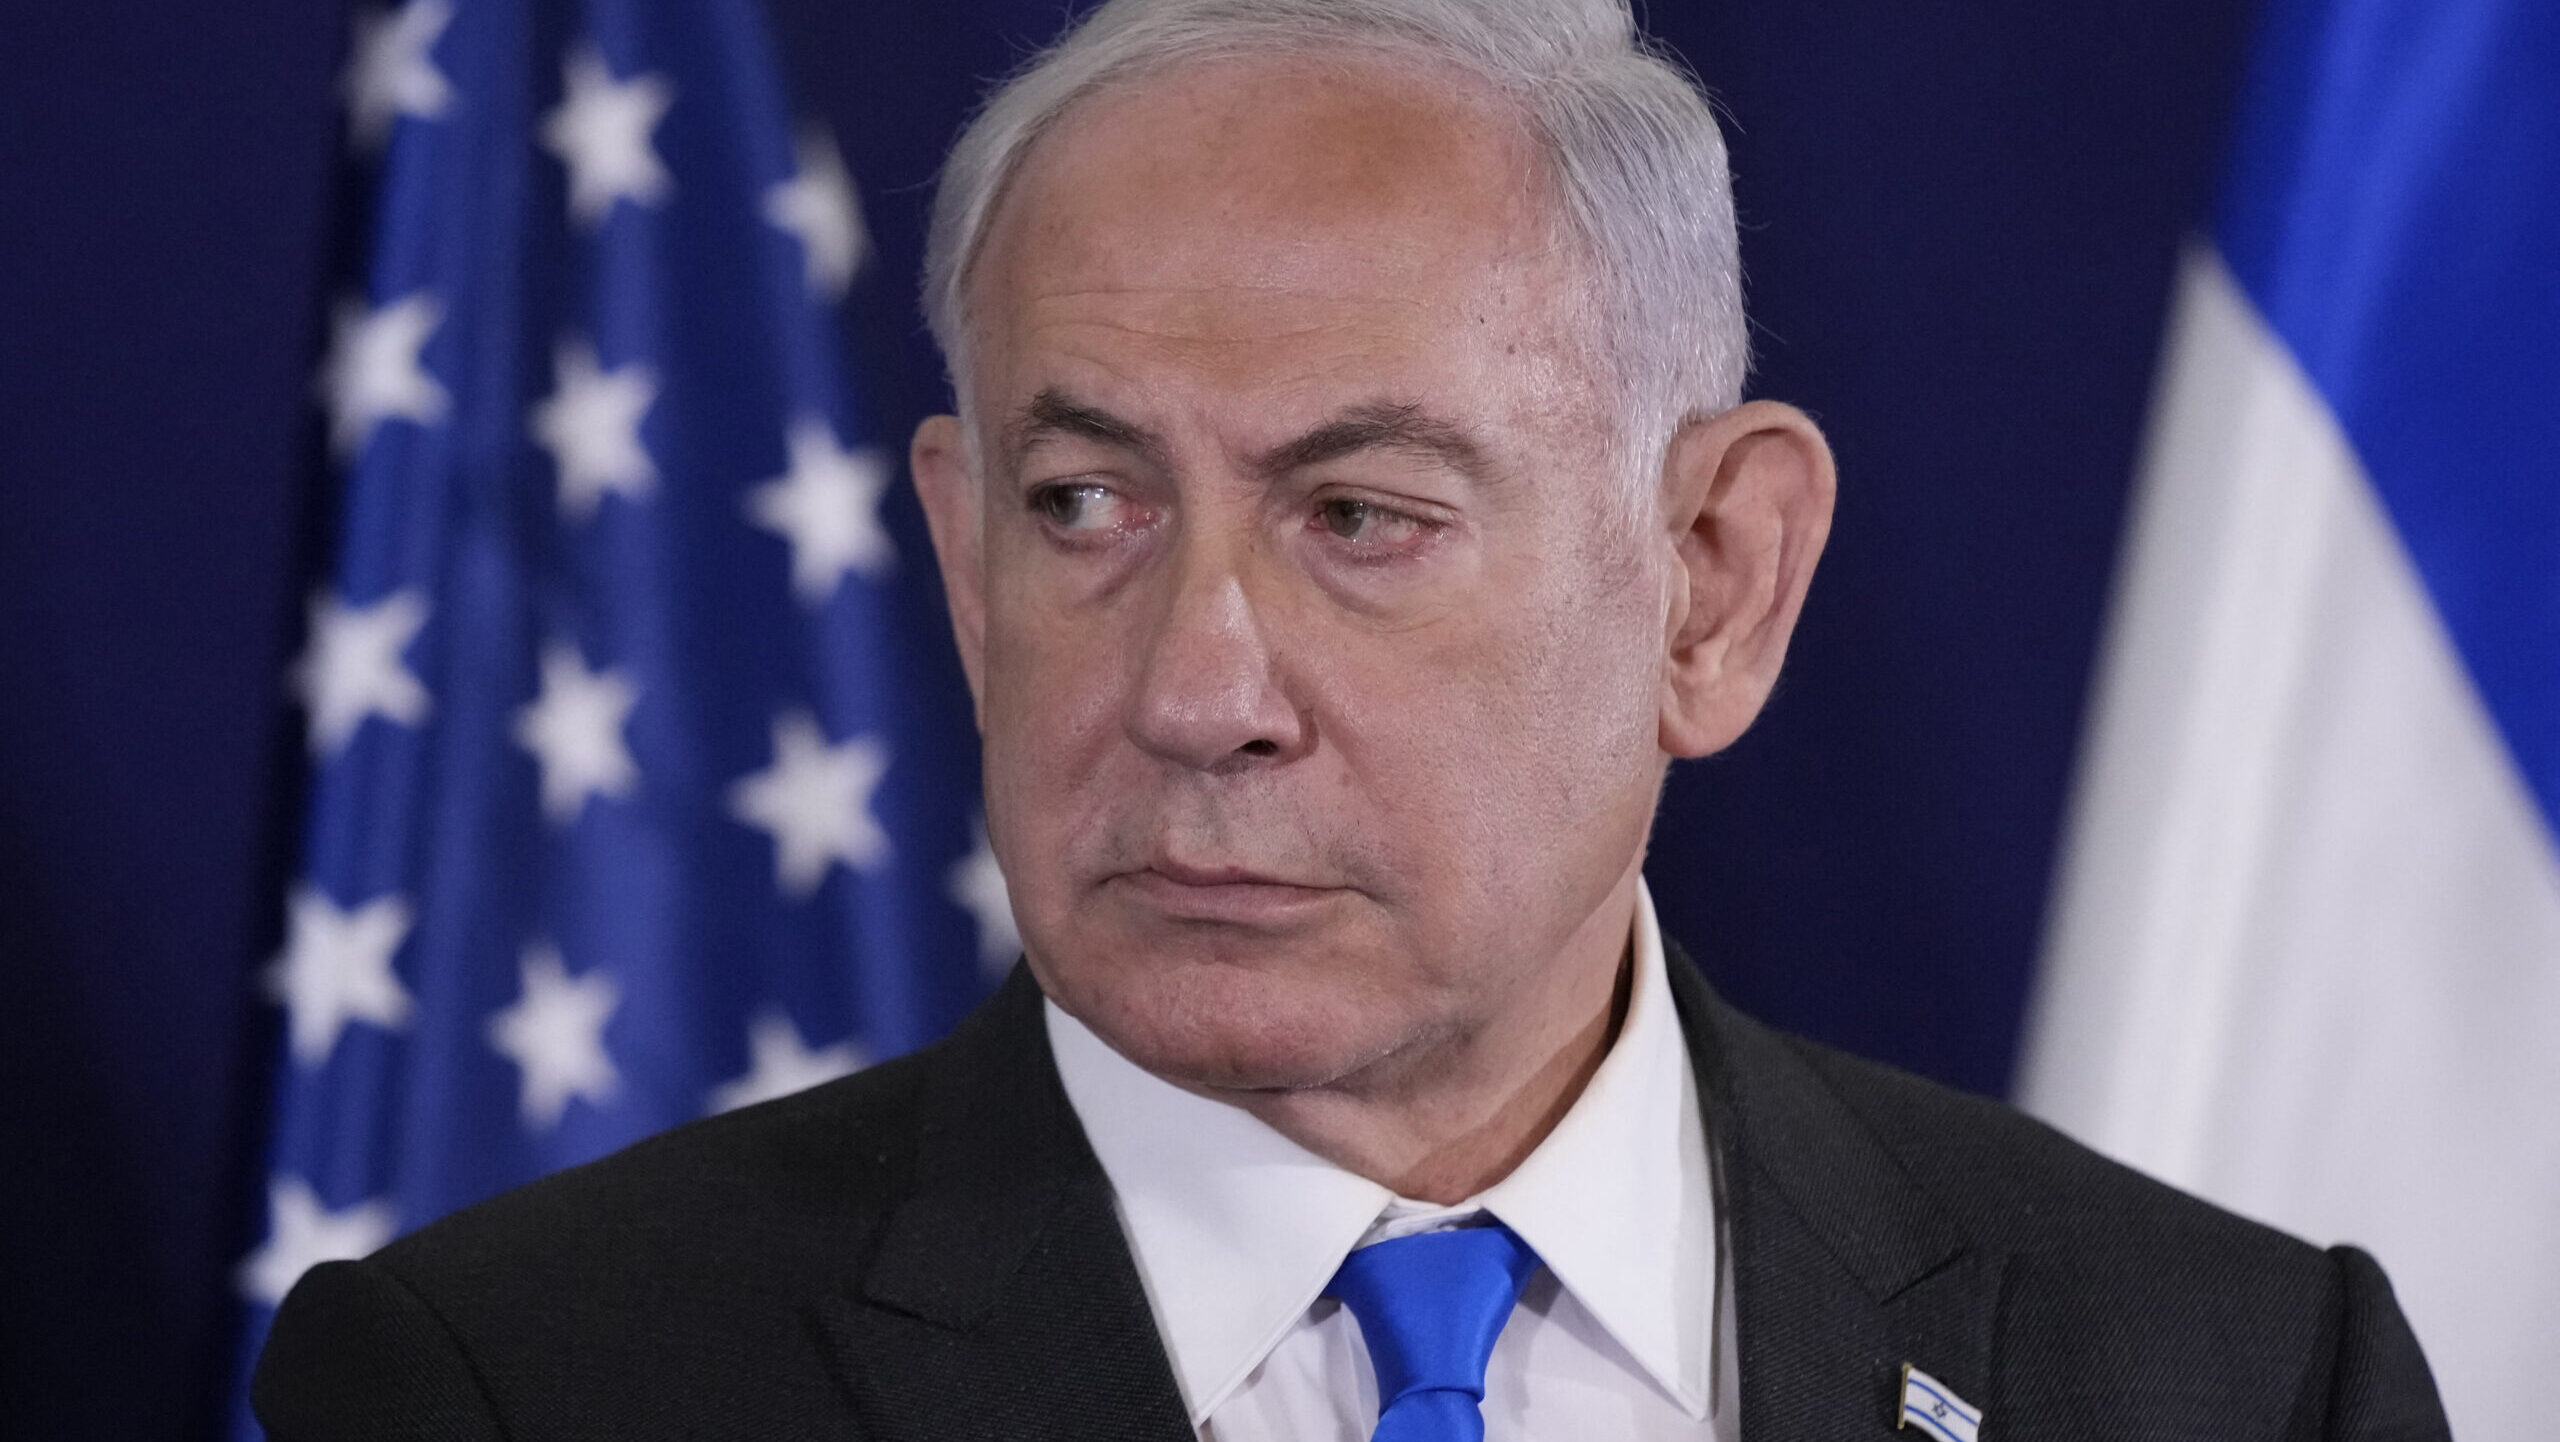 Netanyahu Must Go, but He Won’t Go Quietly